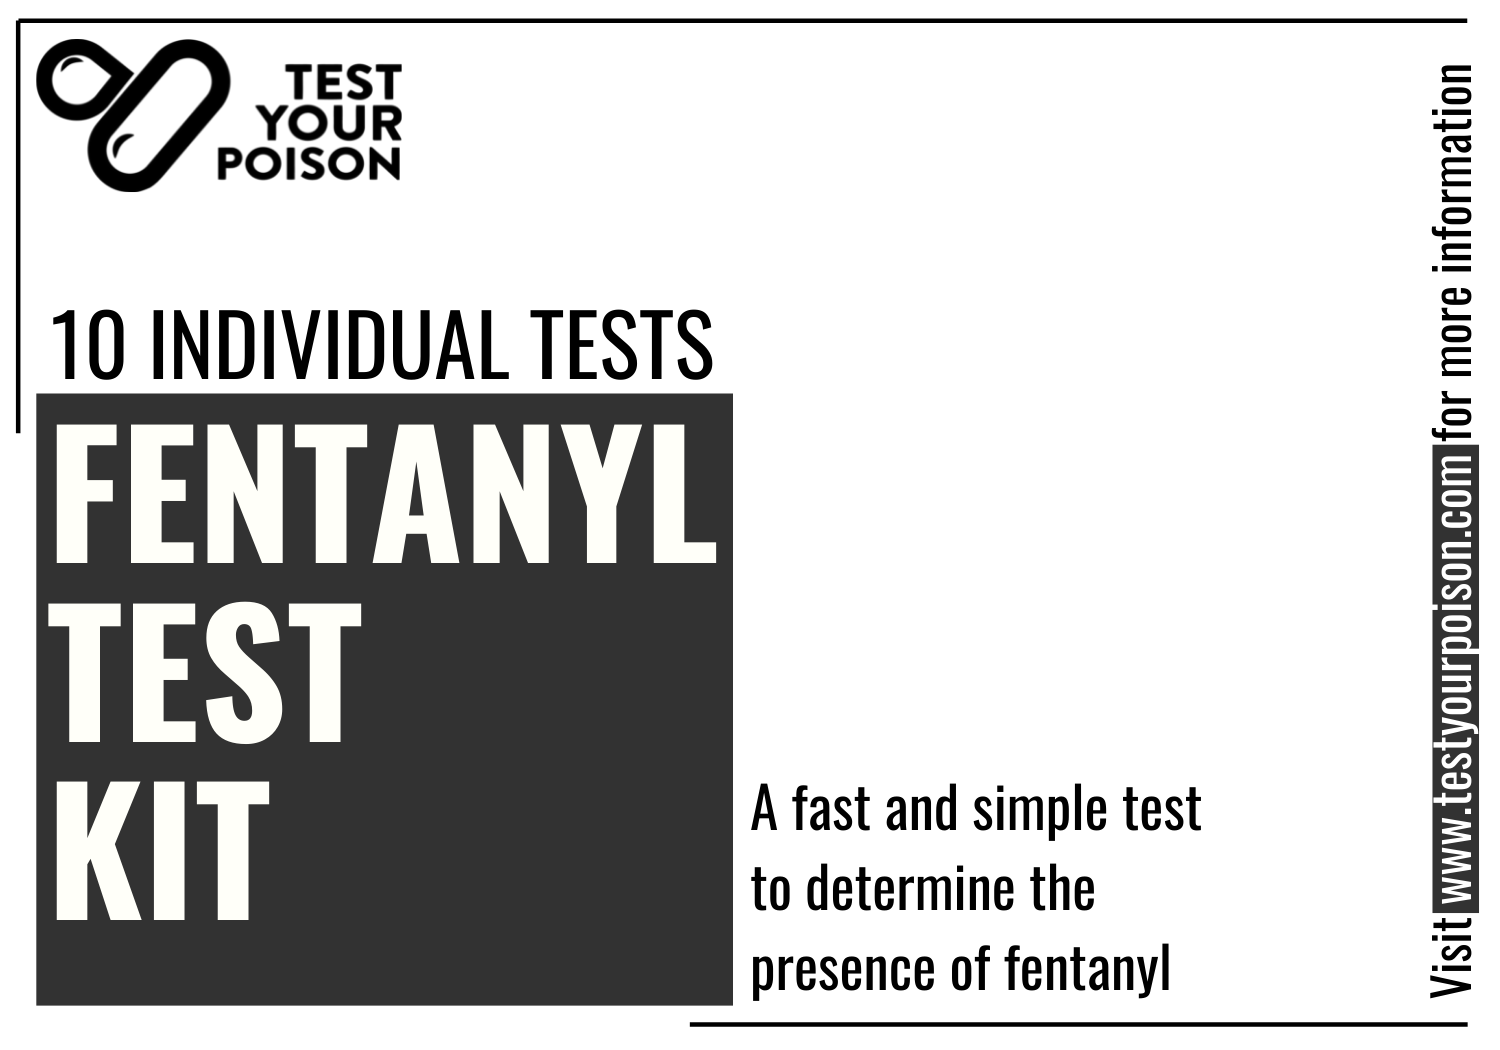 Fentanyl Test Kit Packaging